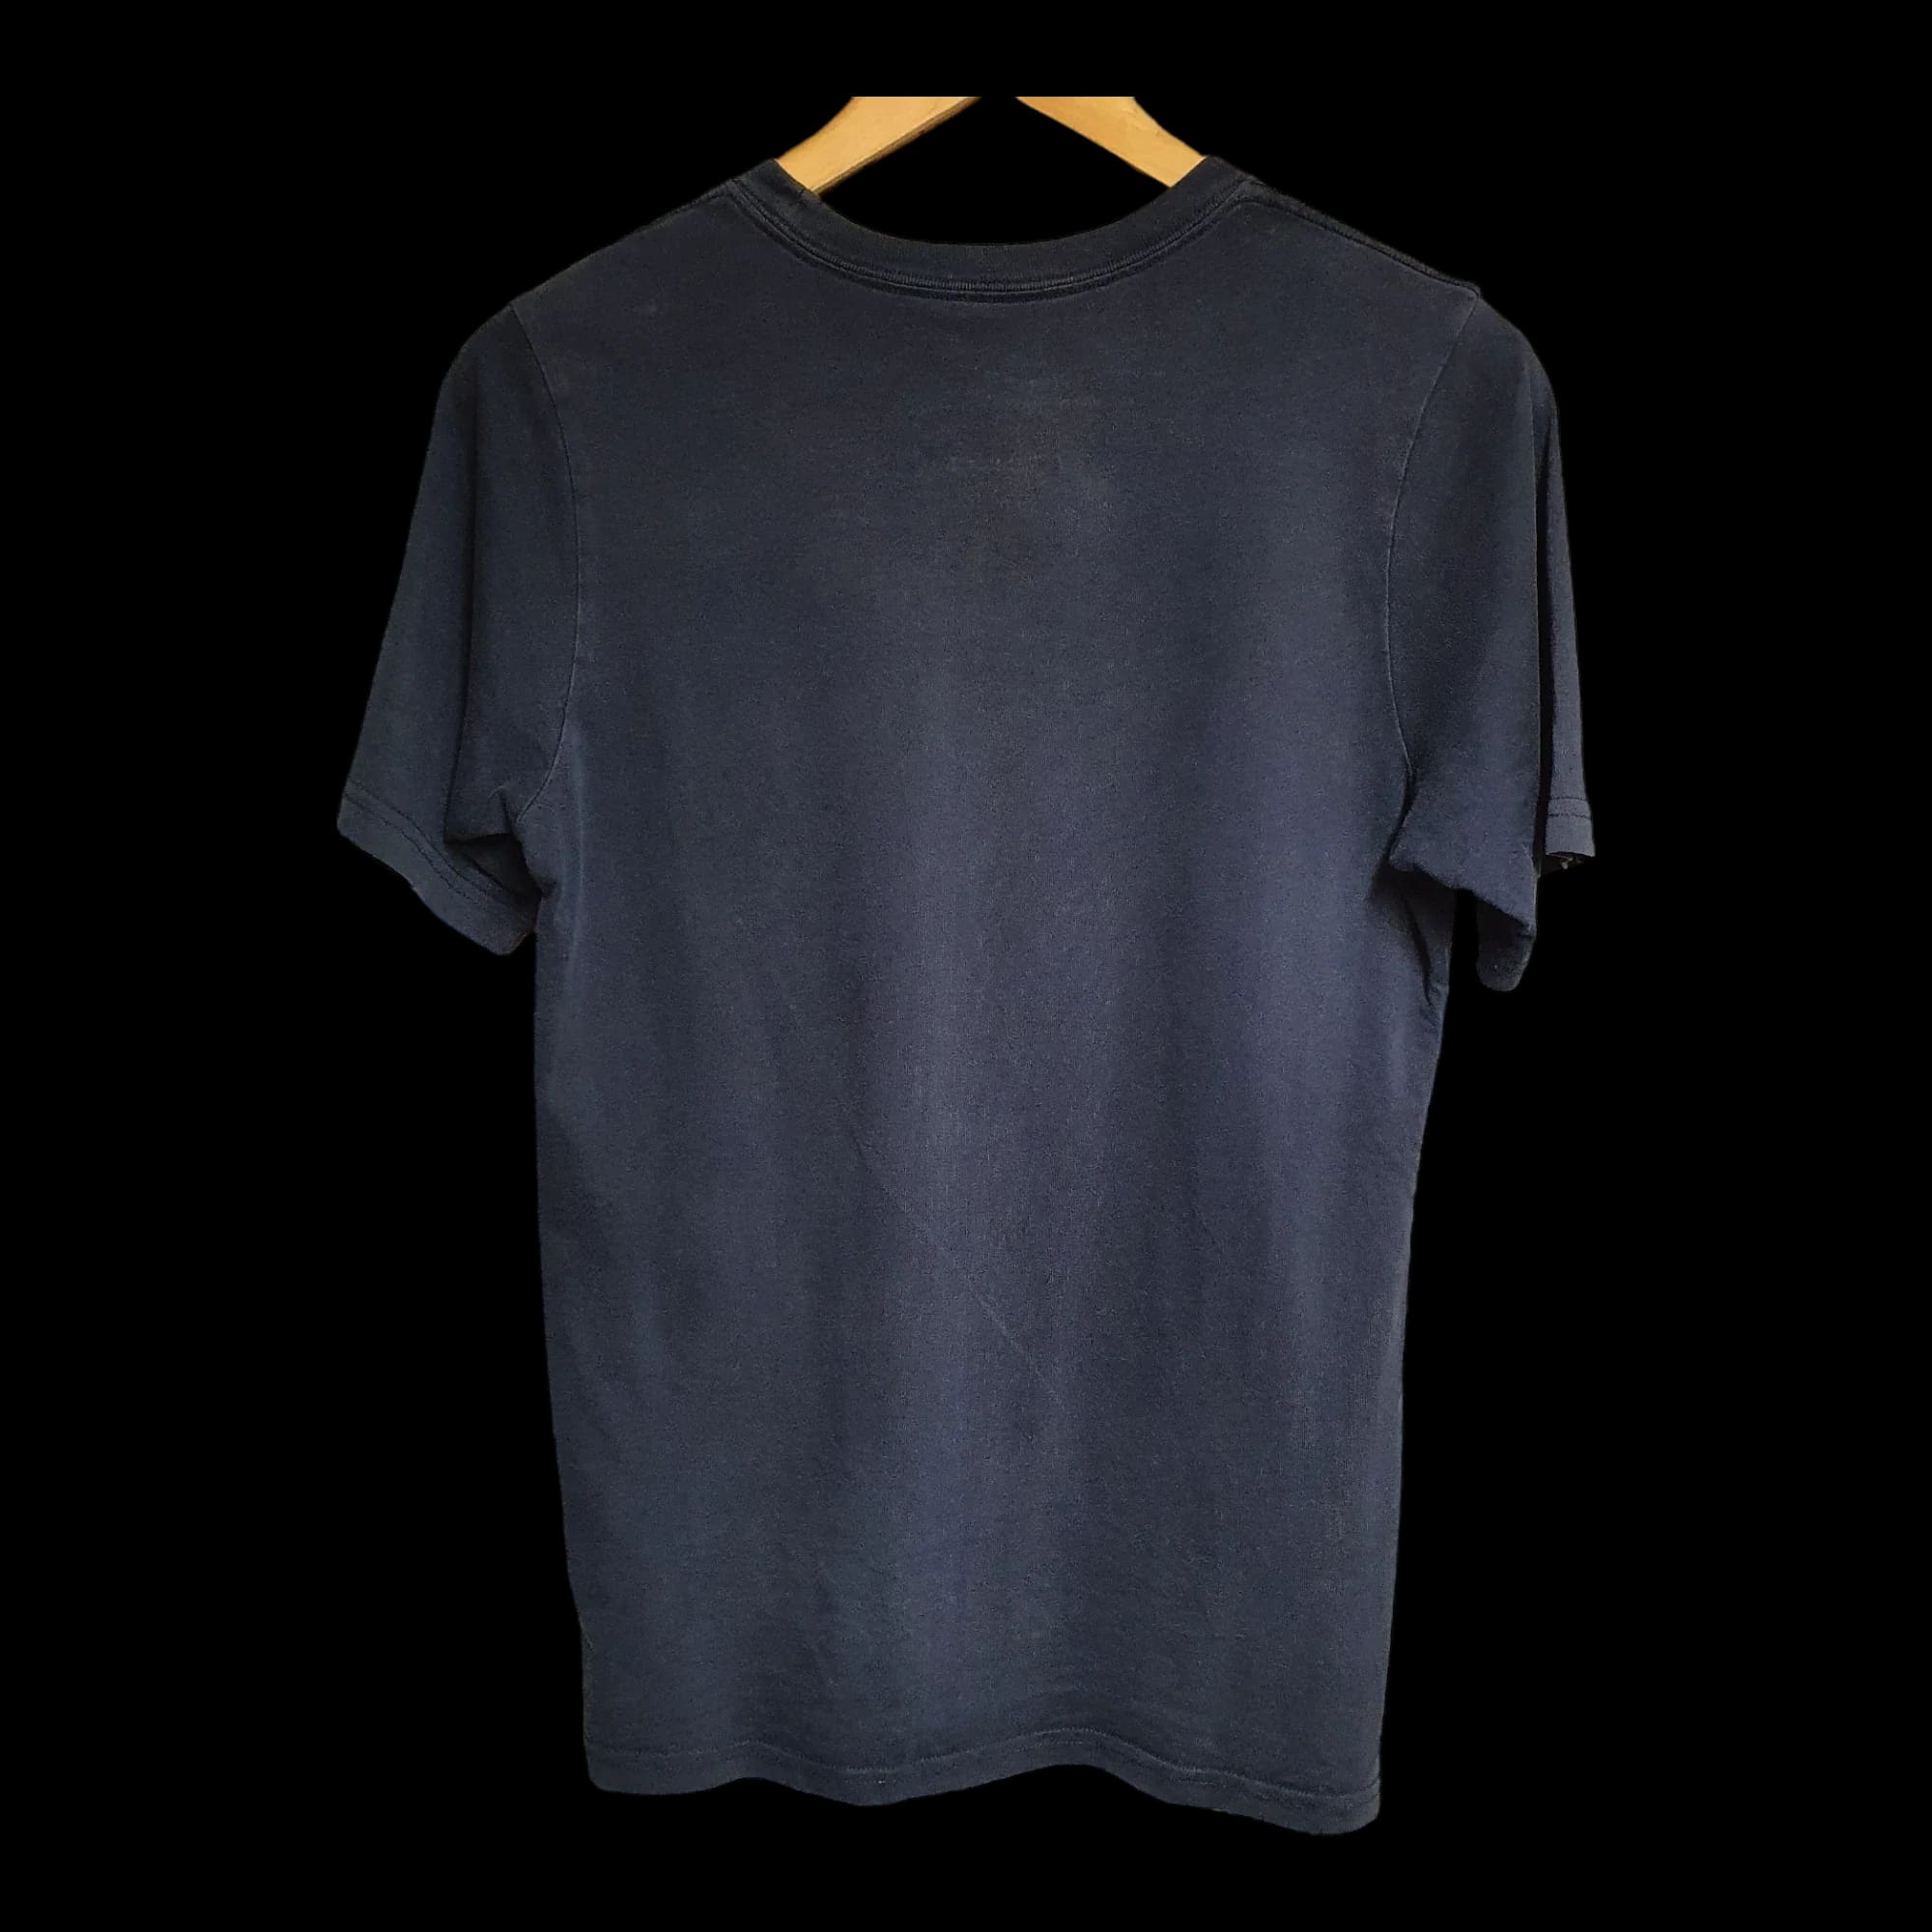 Unisex Vintage Nike Spell Out Blue T-Shirt UK Large